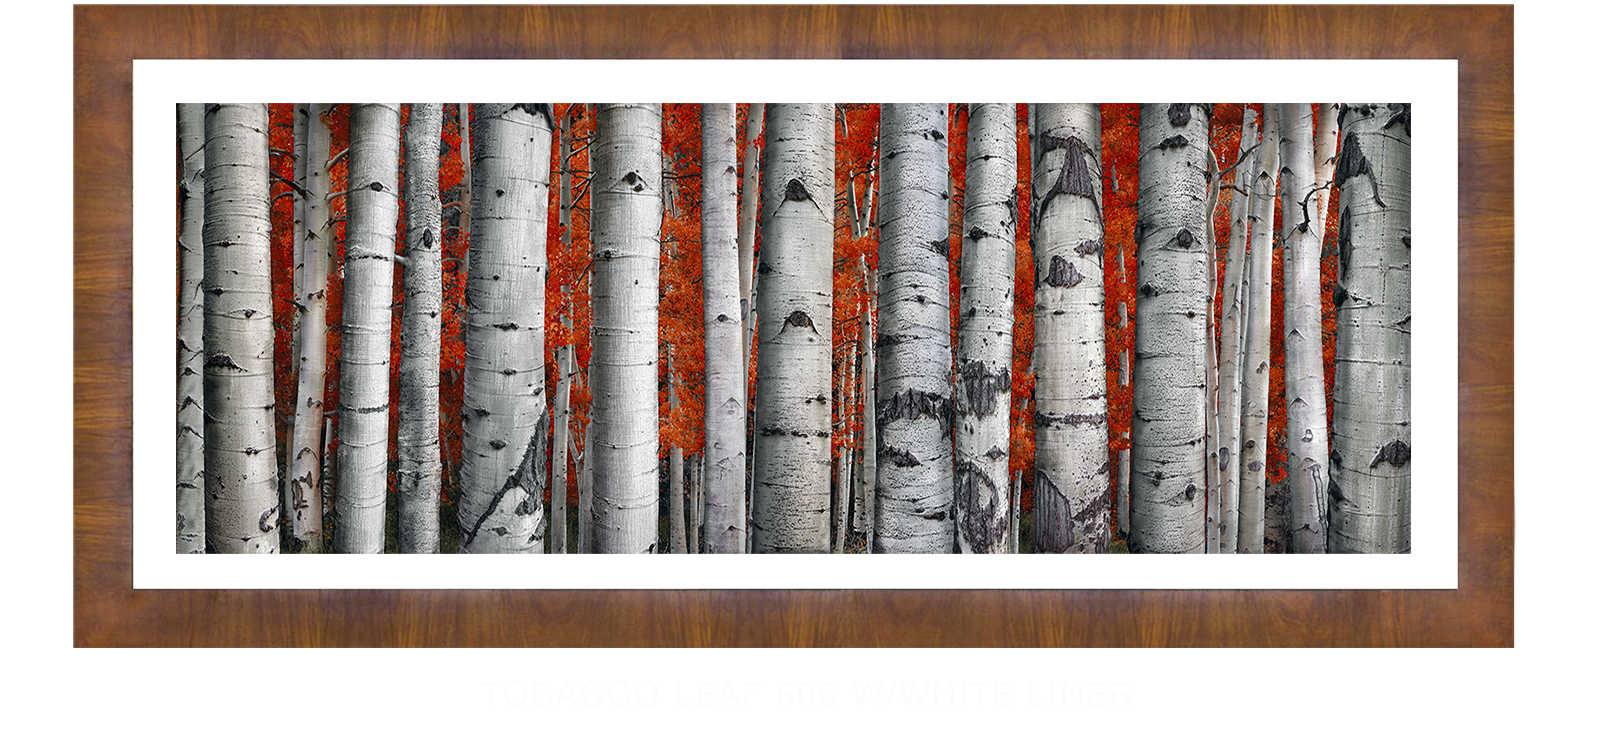 24ASPEN Tobacco Leaf 606 w_Wht Liner T